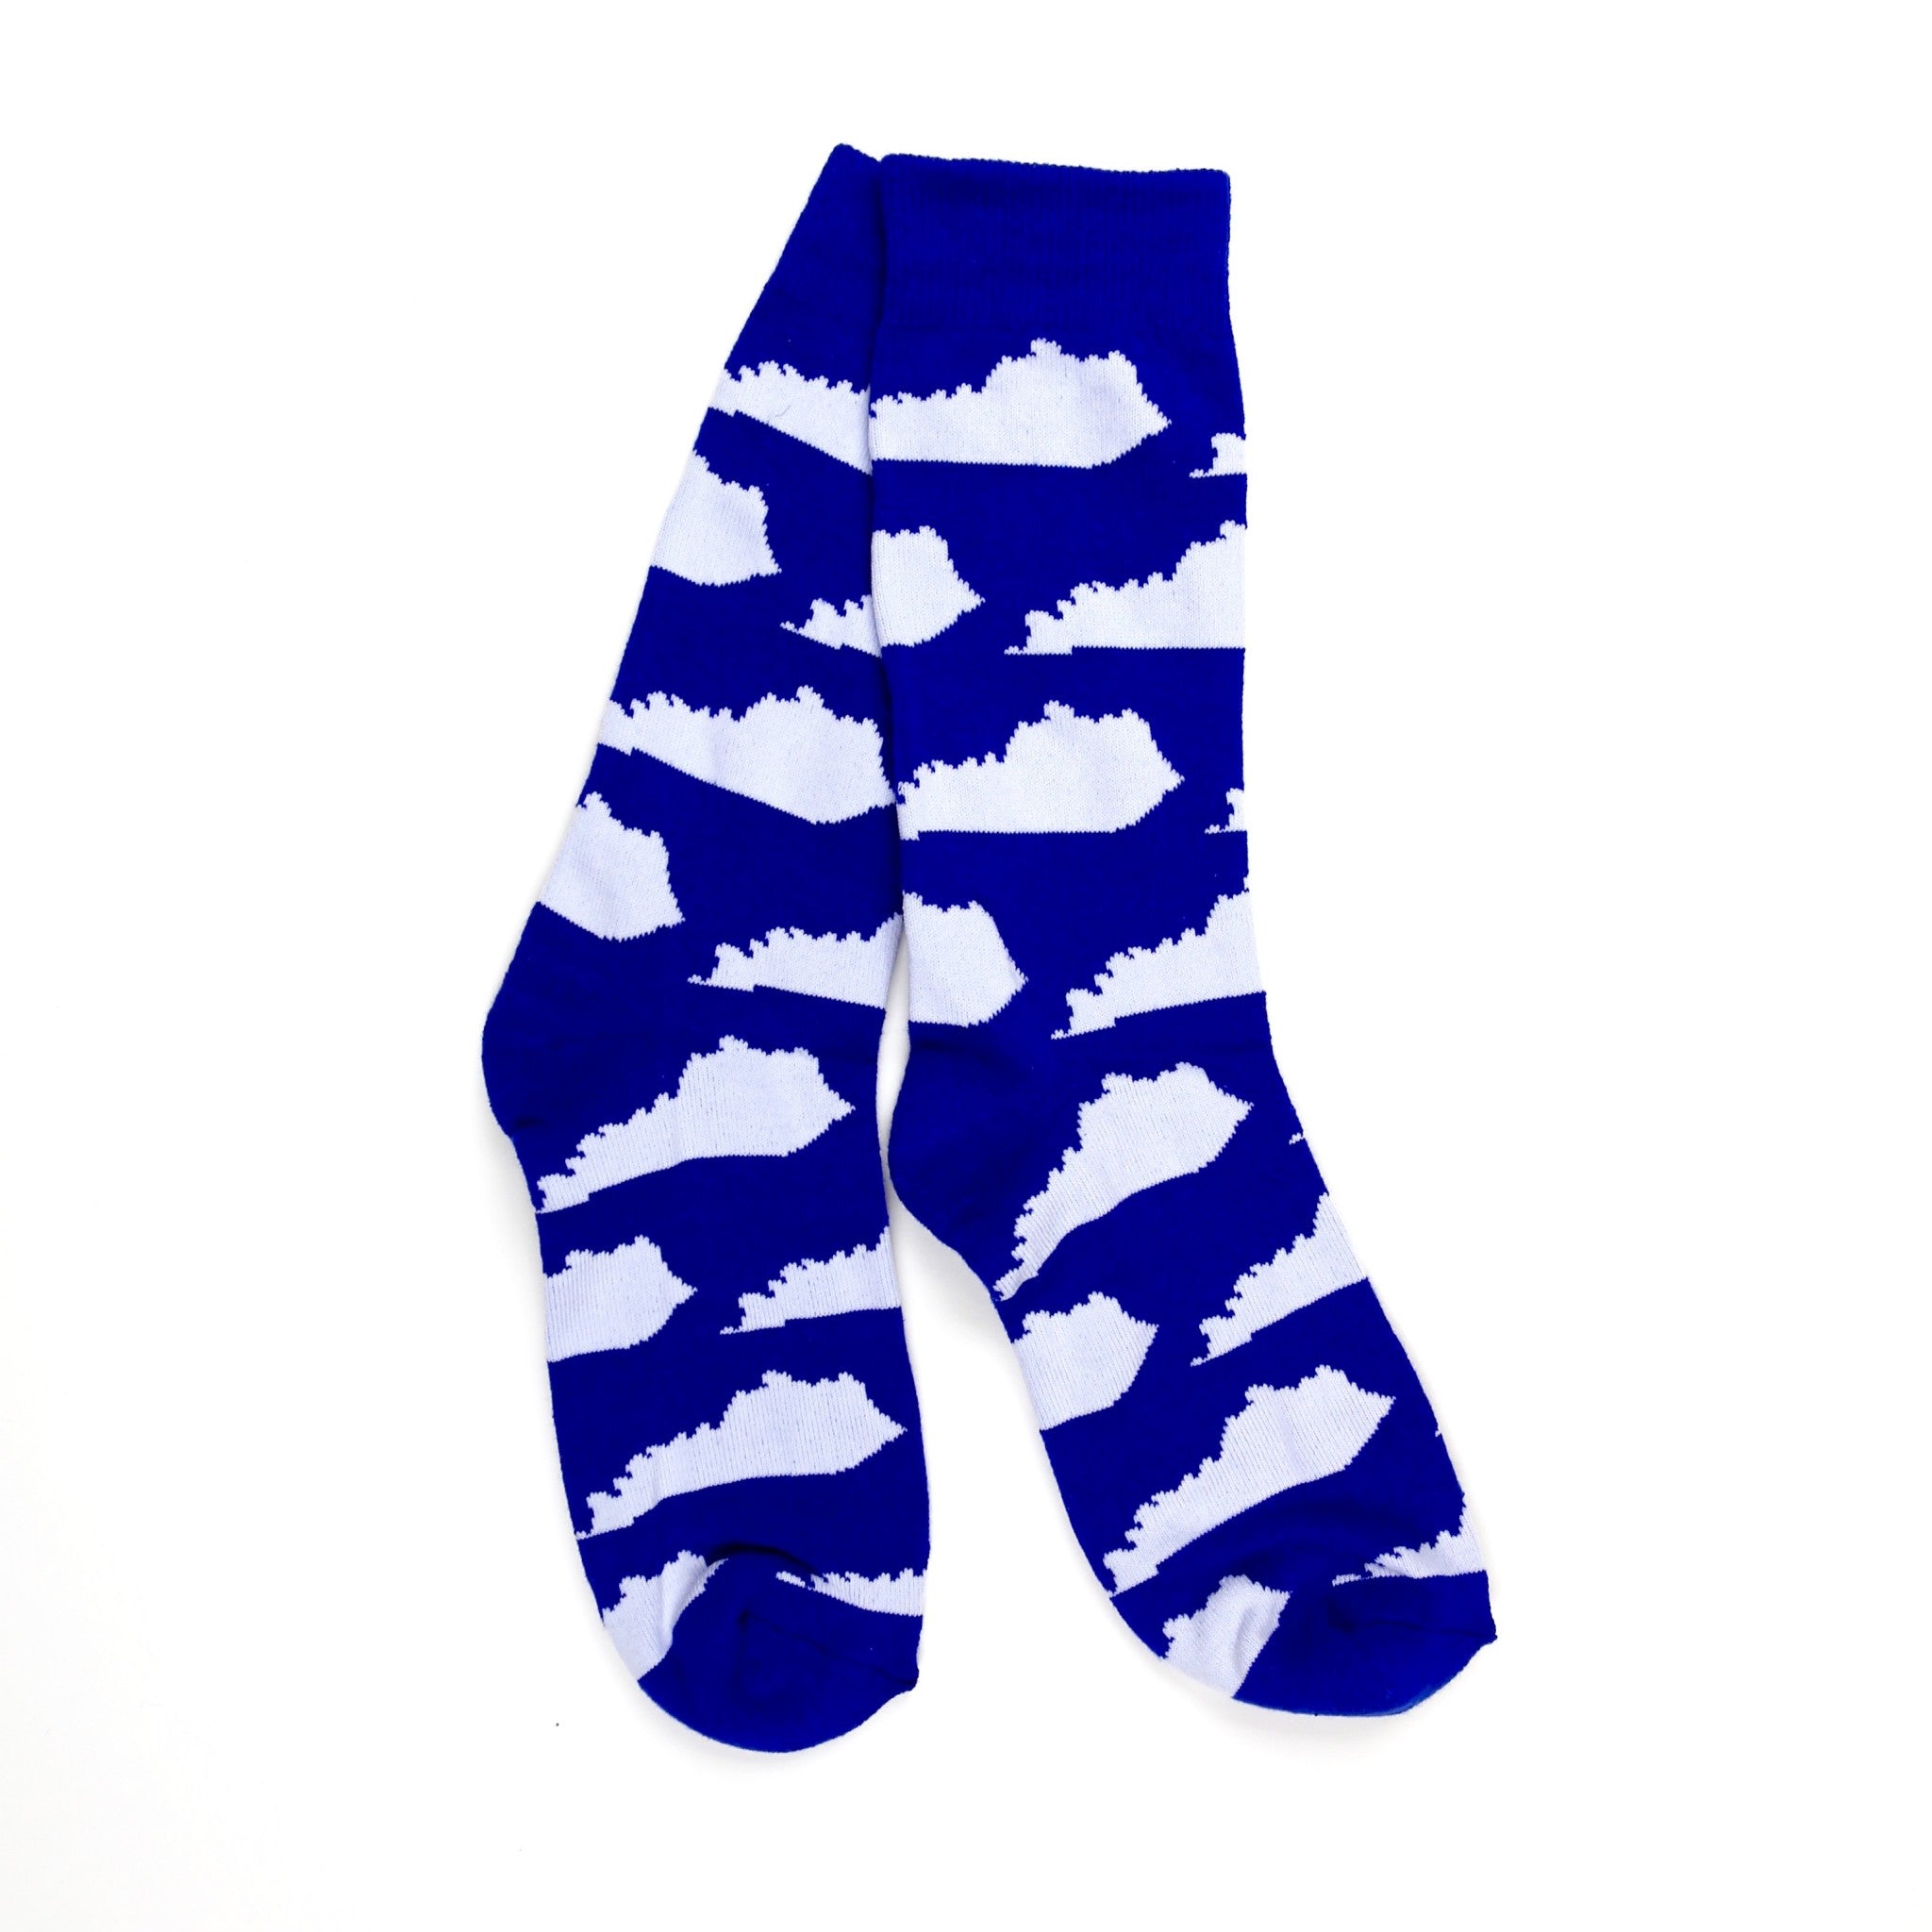 Grey/blue Kentucky Socks 